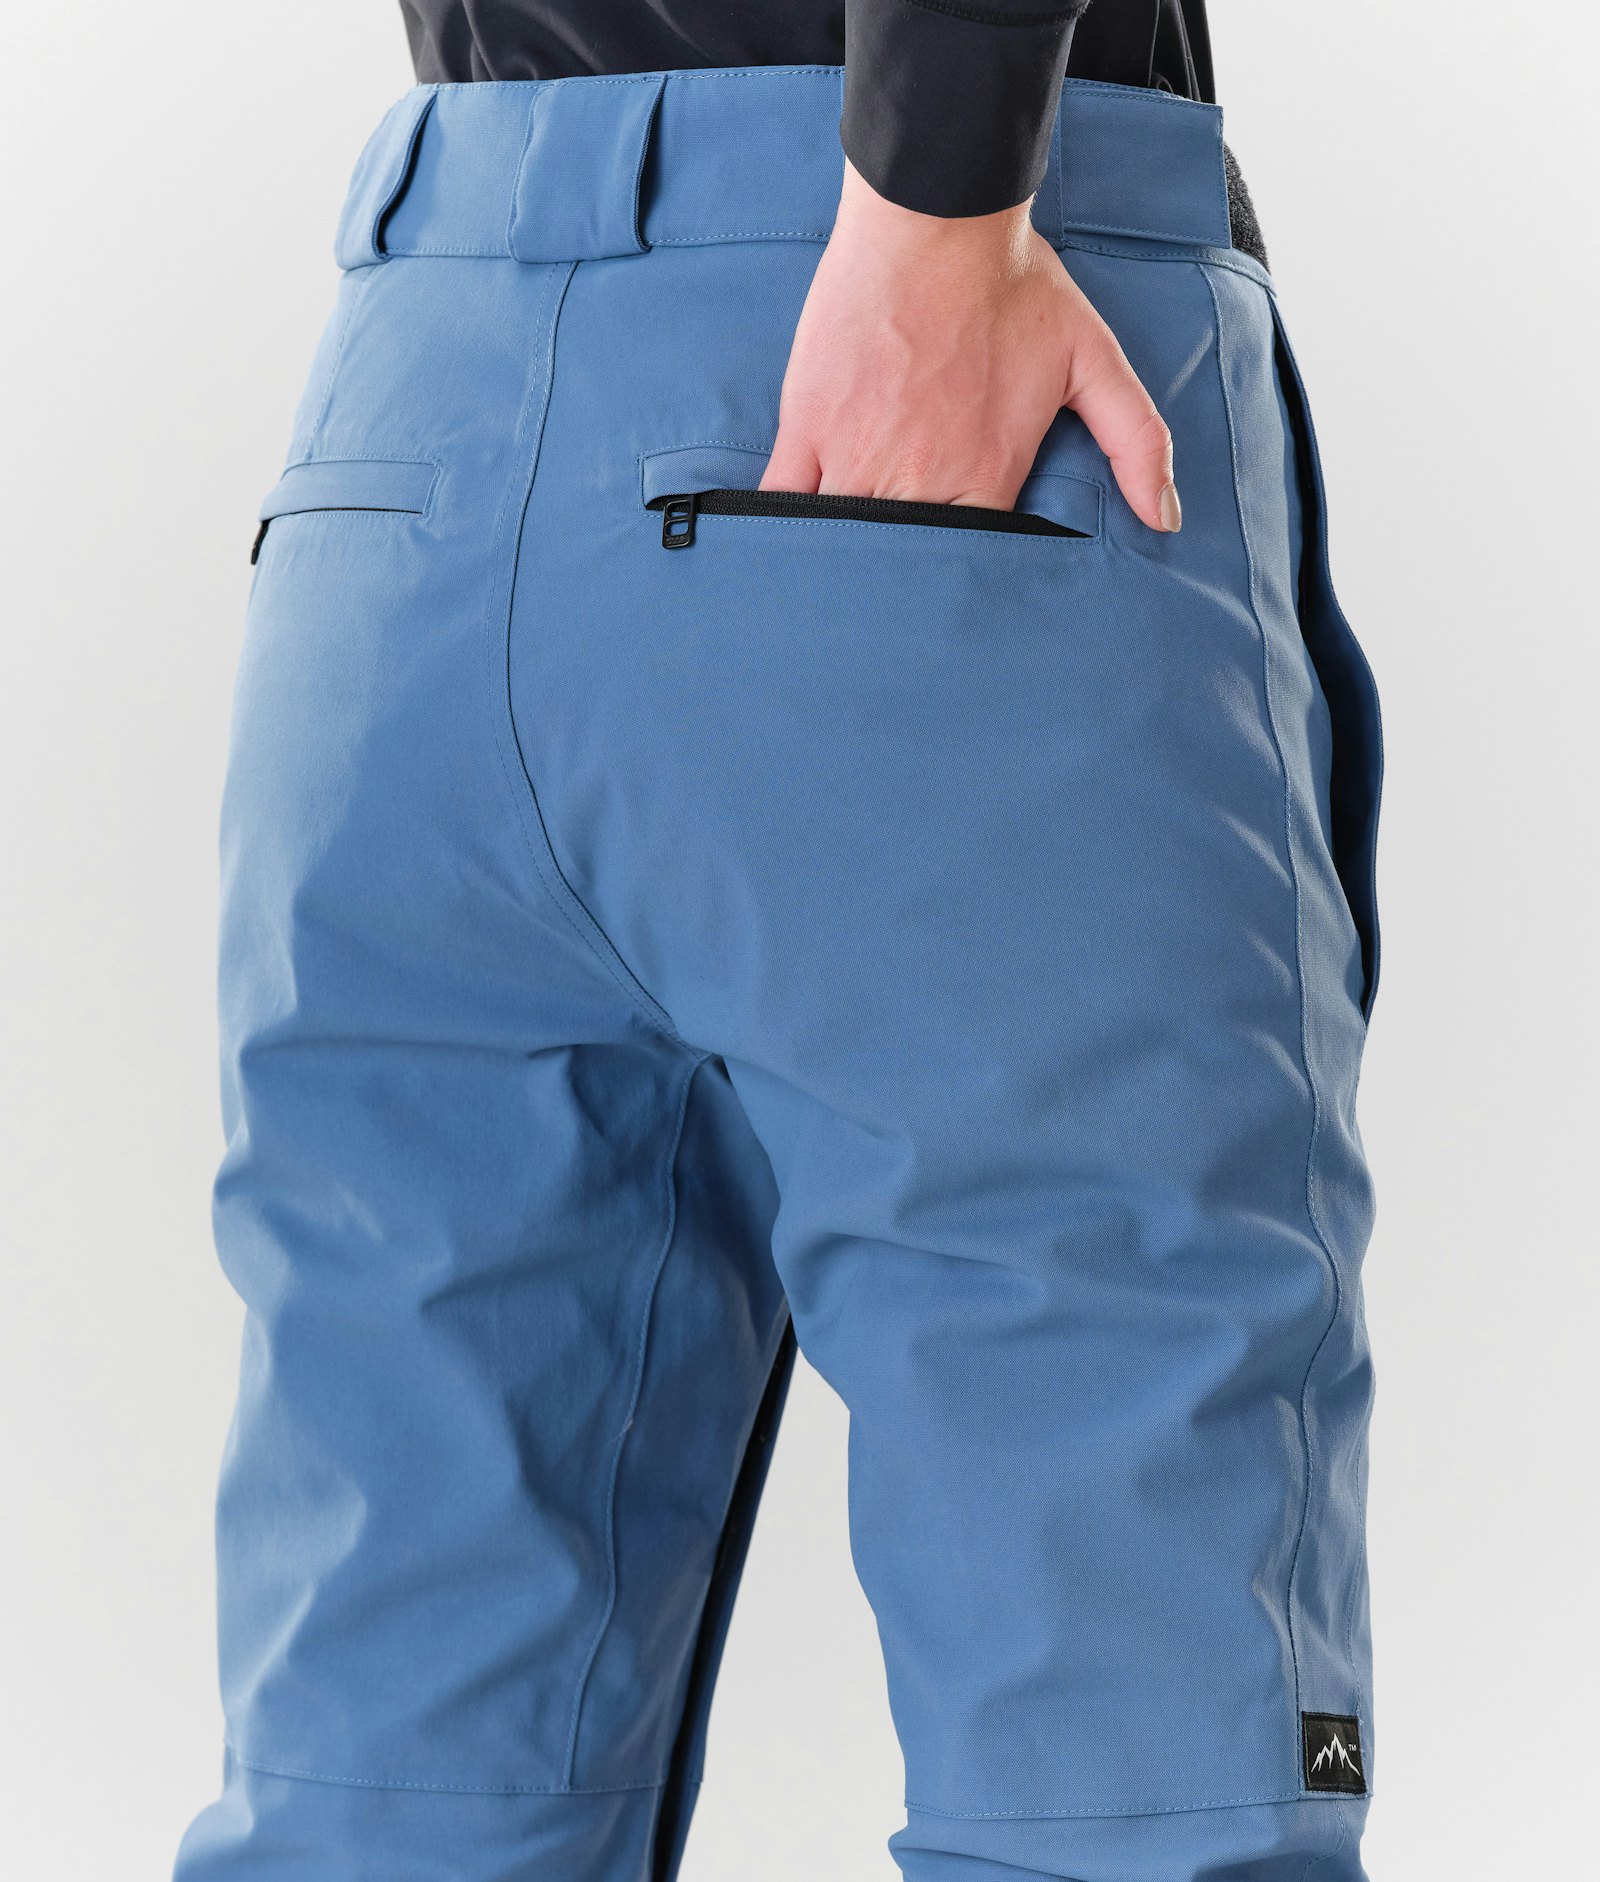 Dope Con W 2020 Pantalones Snowboard Mujer Blue Steel